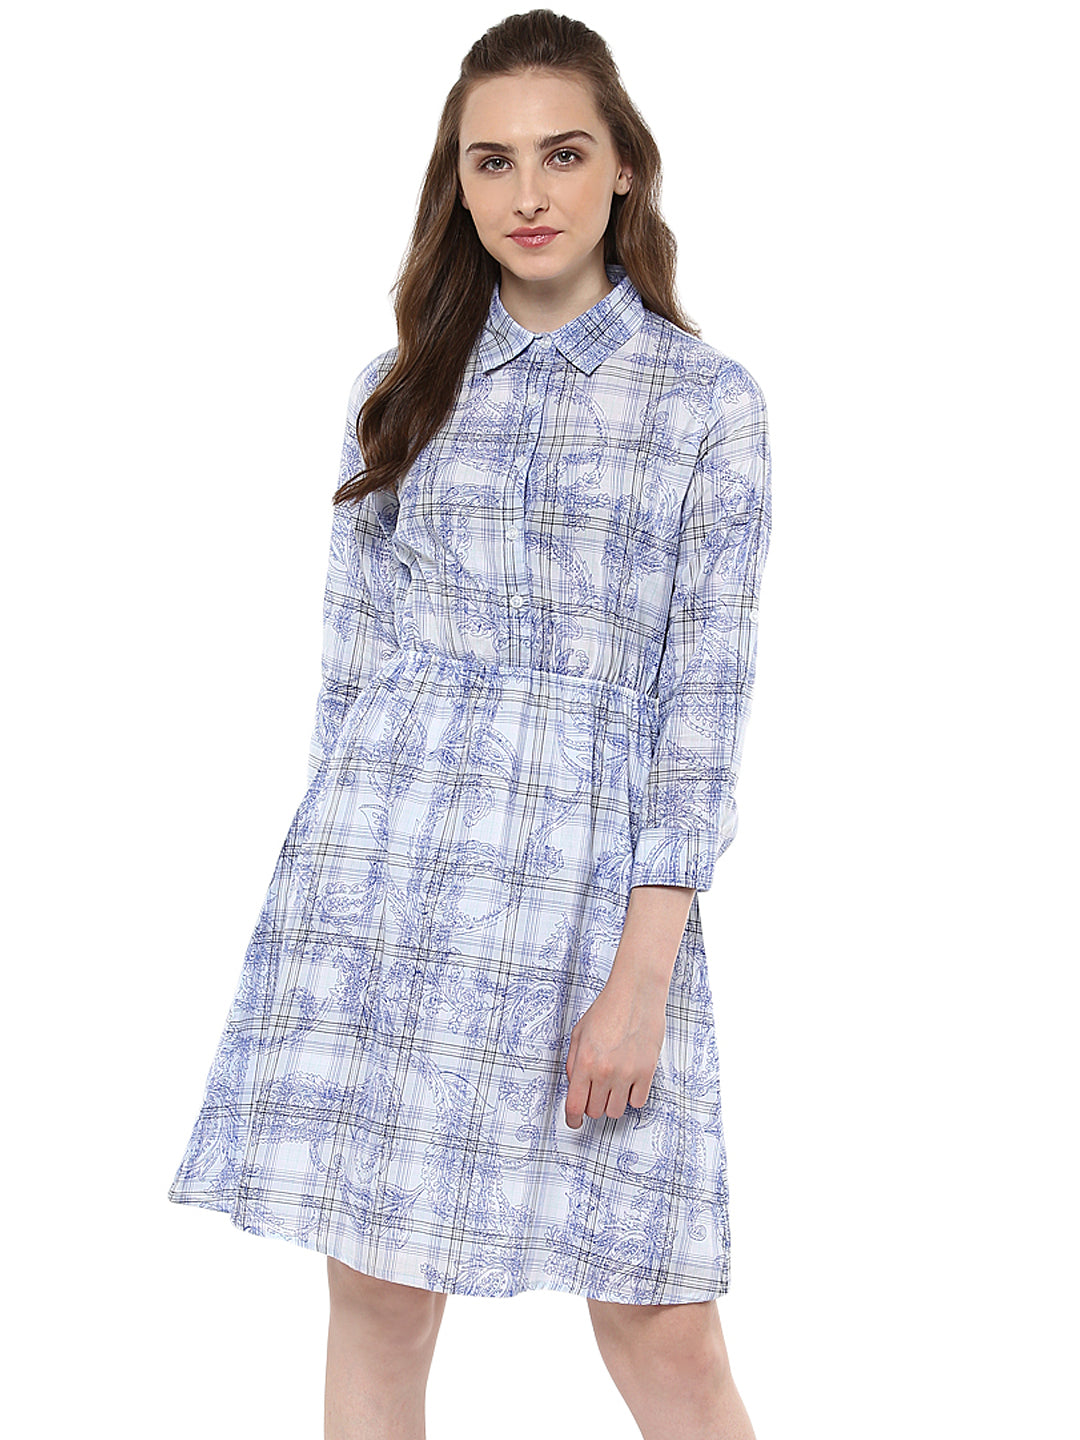 Women's Blue and White Check Shirt Dress - StyleStone